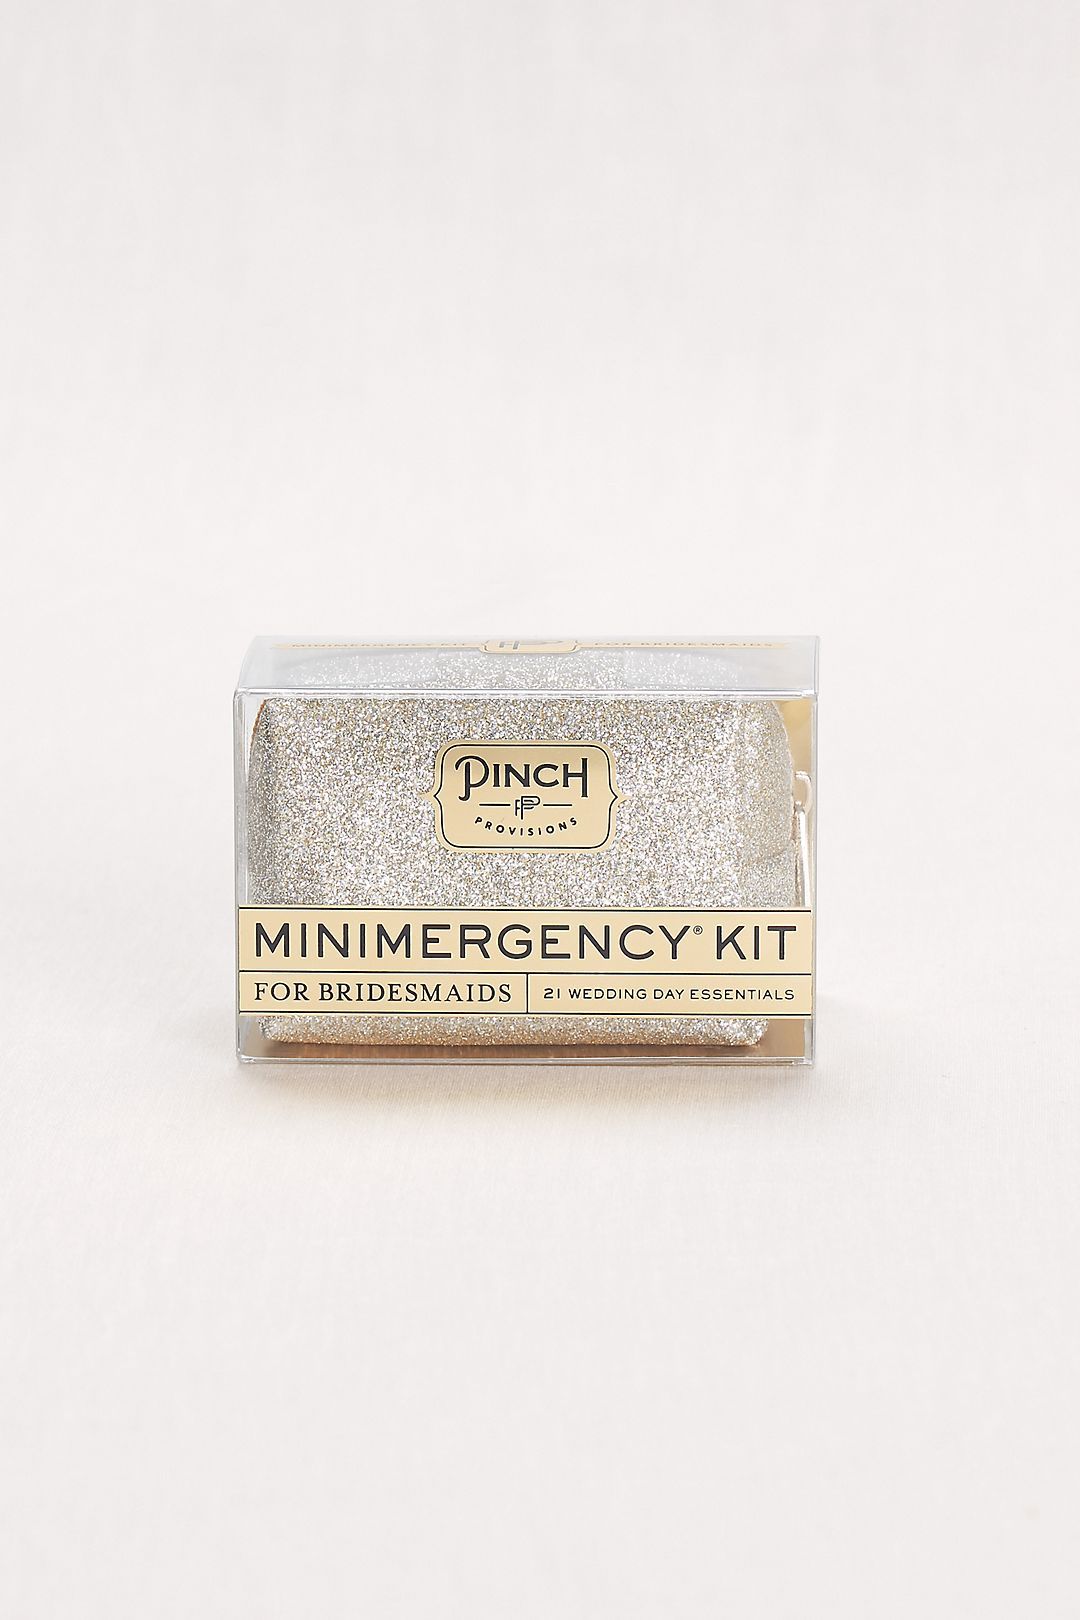 Minimergency Kit for Bridesmaids | Davids Bridal